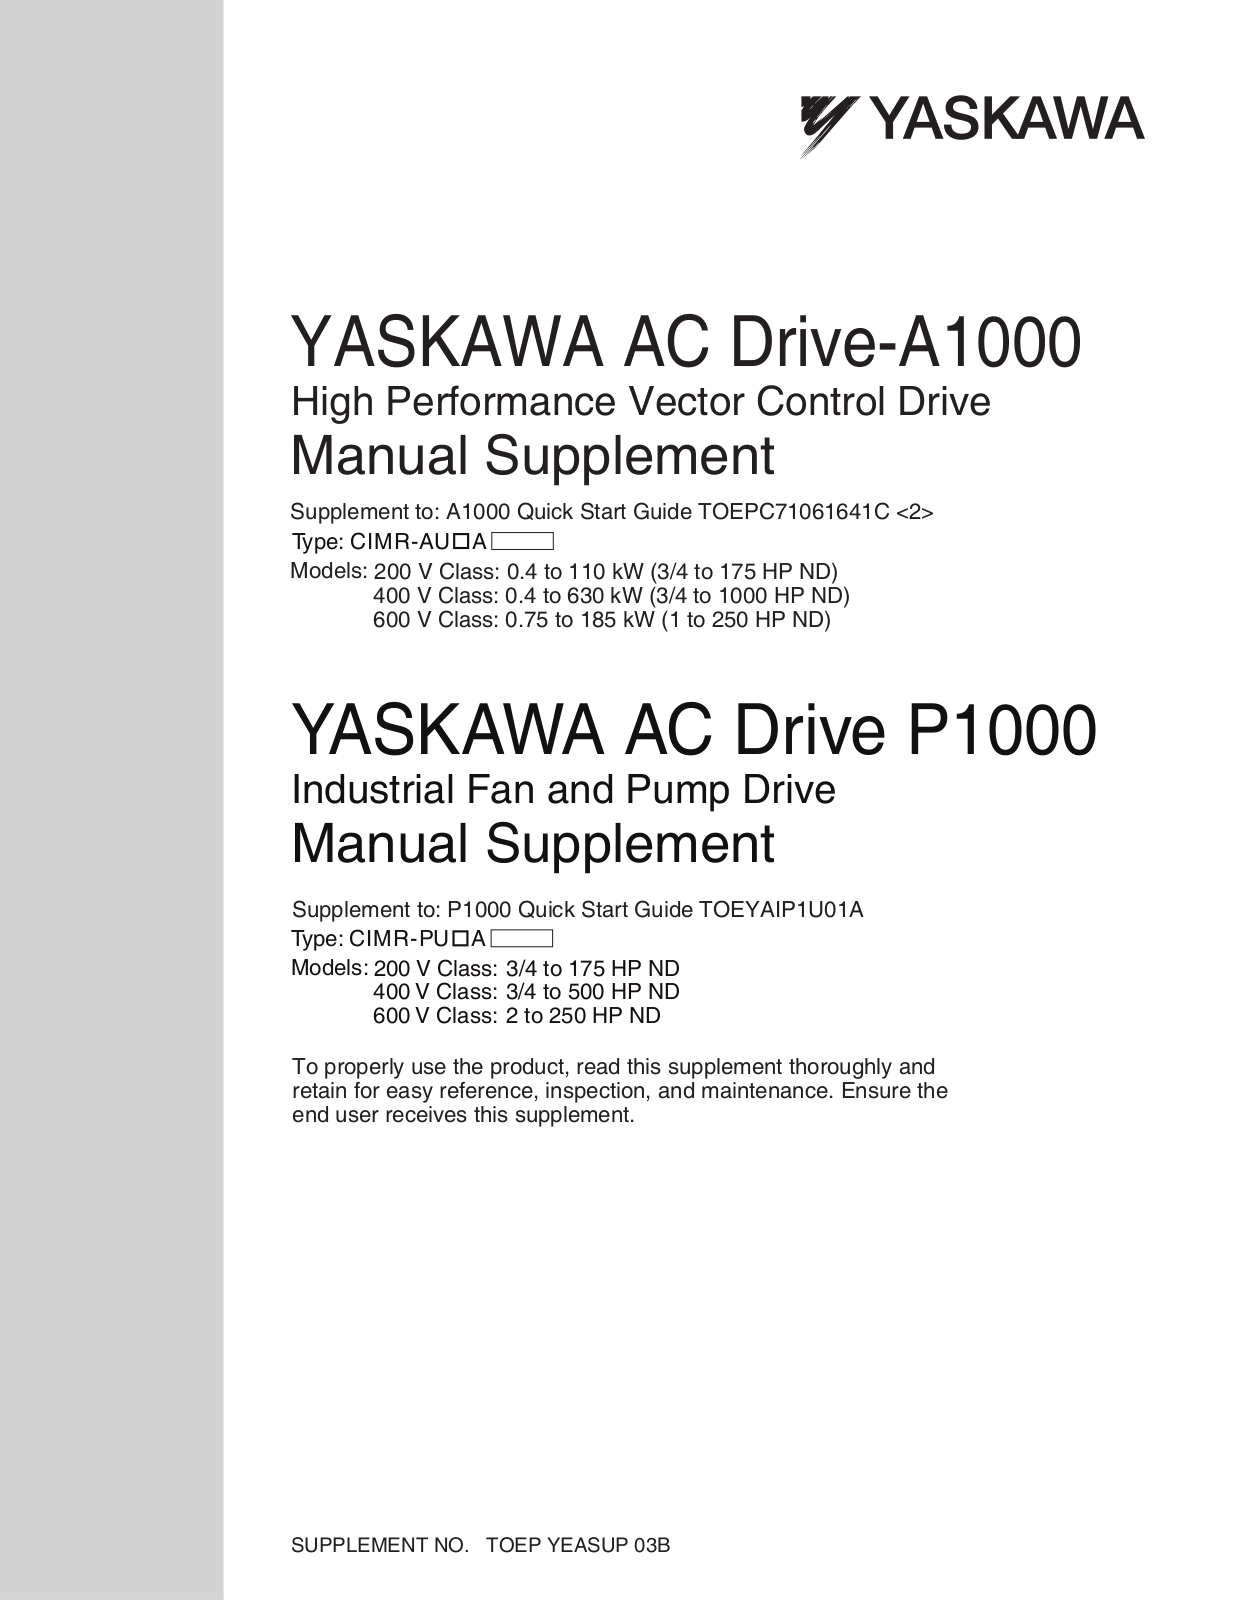 Yaskawa AC Drive A1000, AC Drive P1000 Manual Supplement